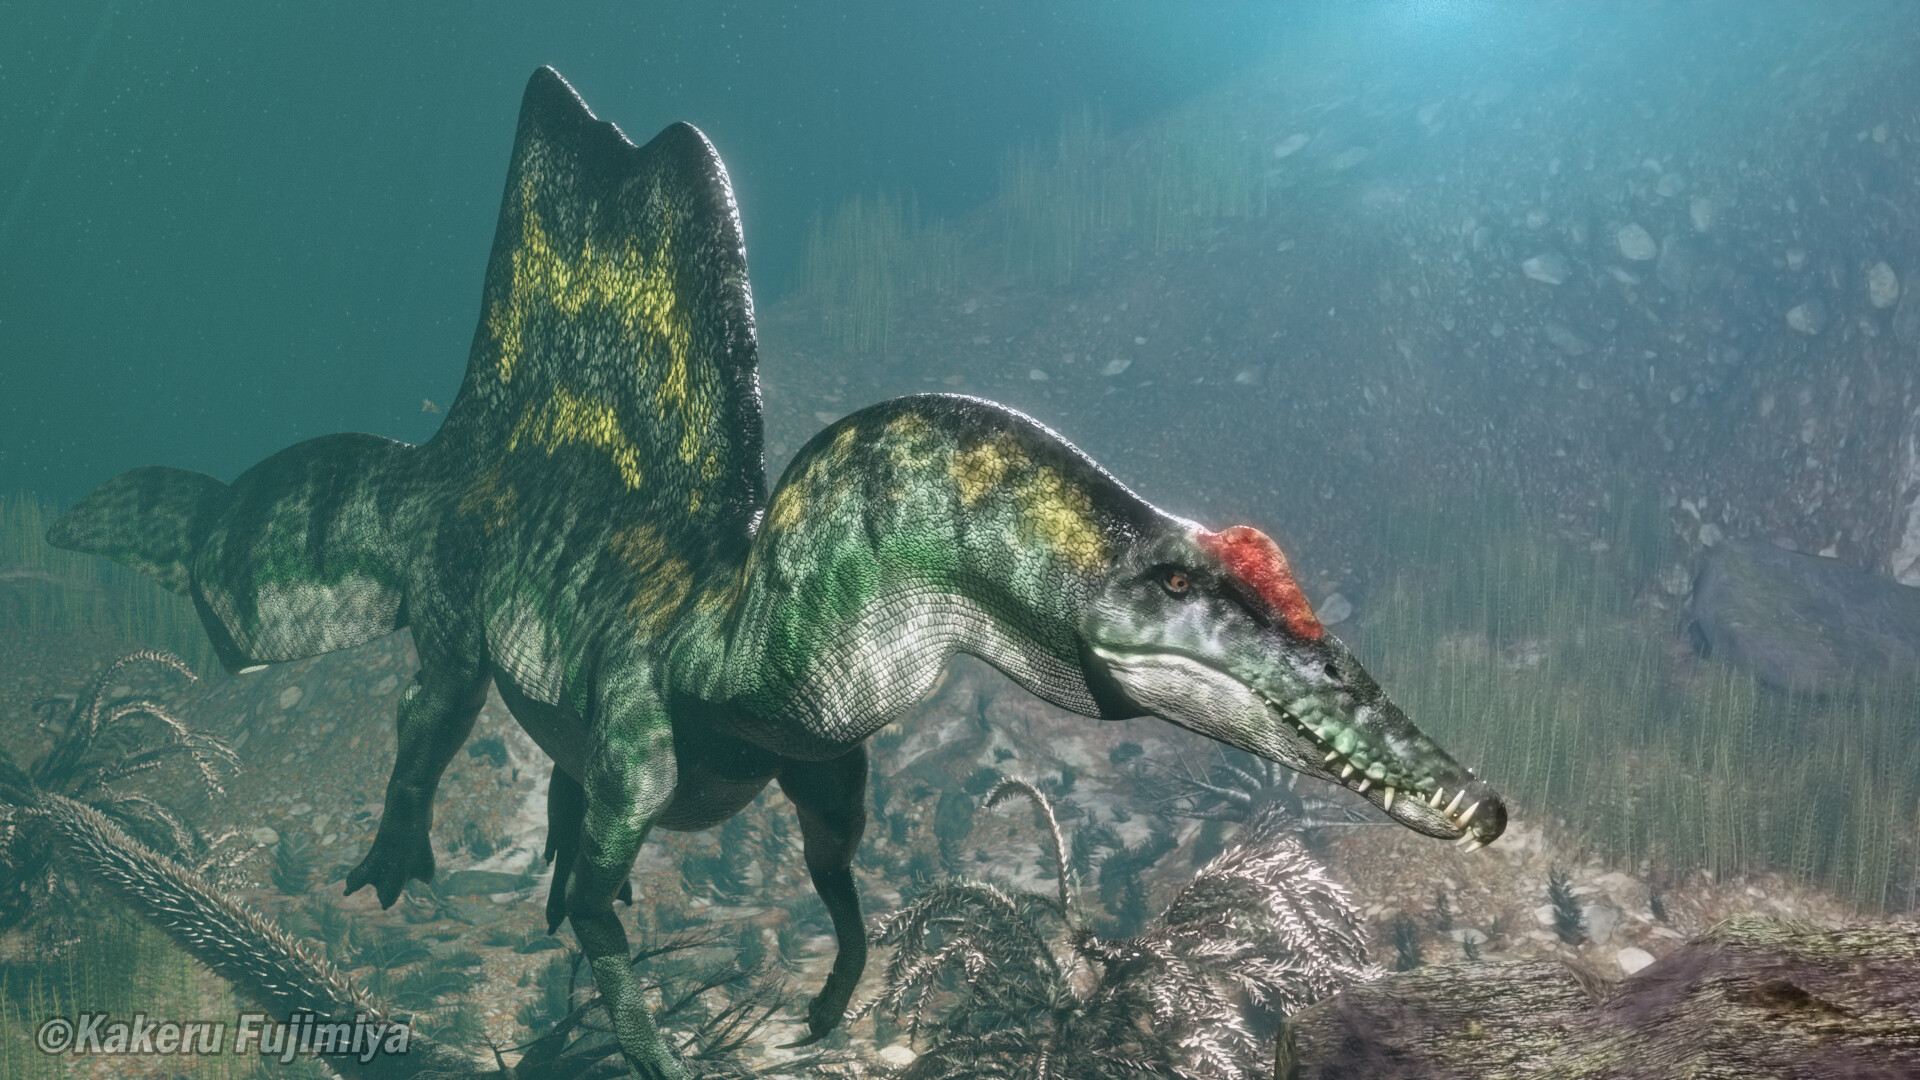 dinosaurs spinosaurus in water